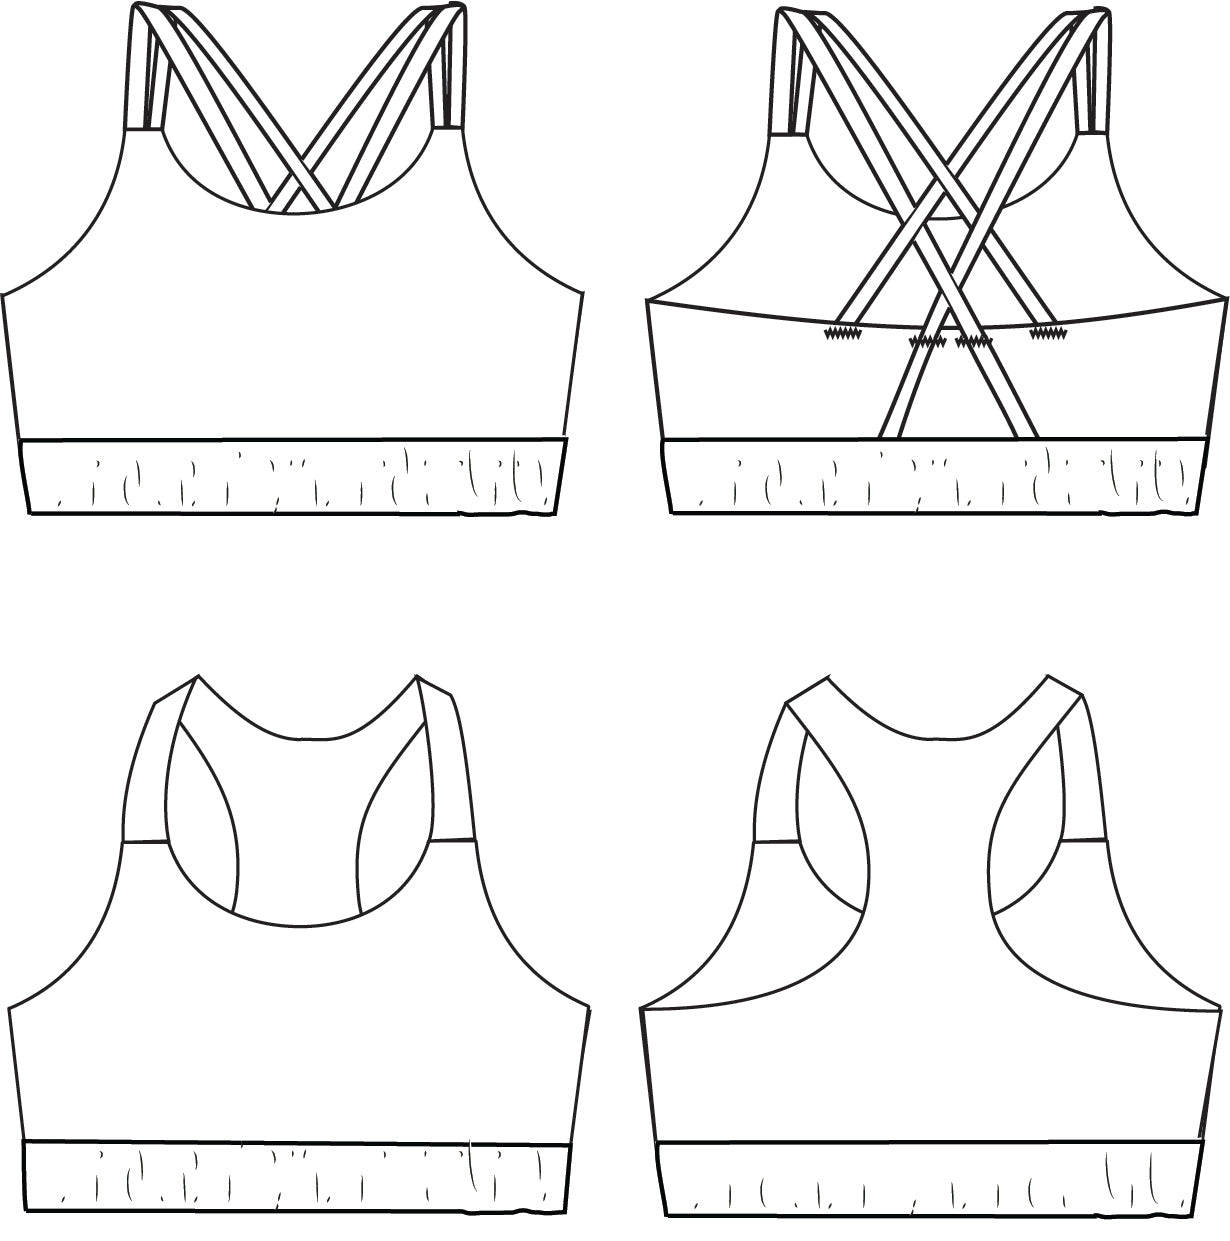 Alice Sports Bra PDF Sewing Pattern